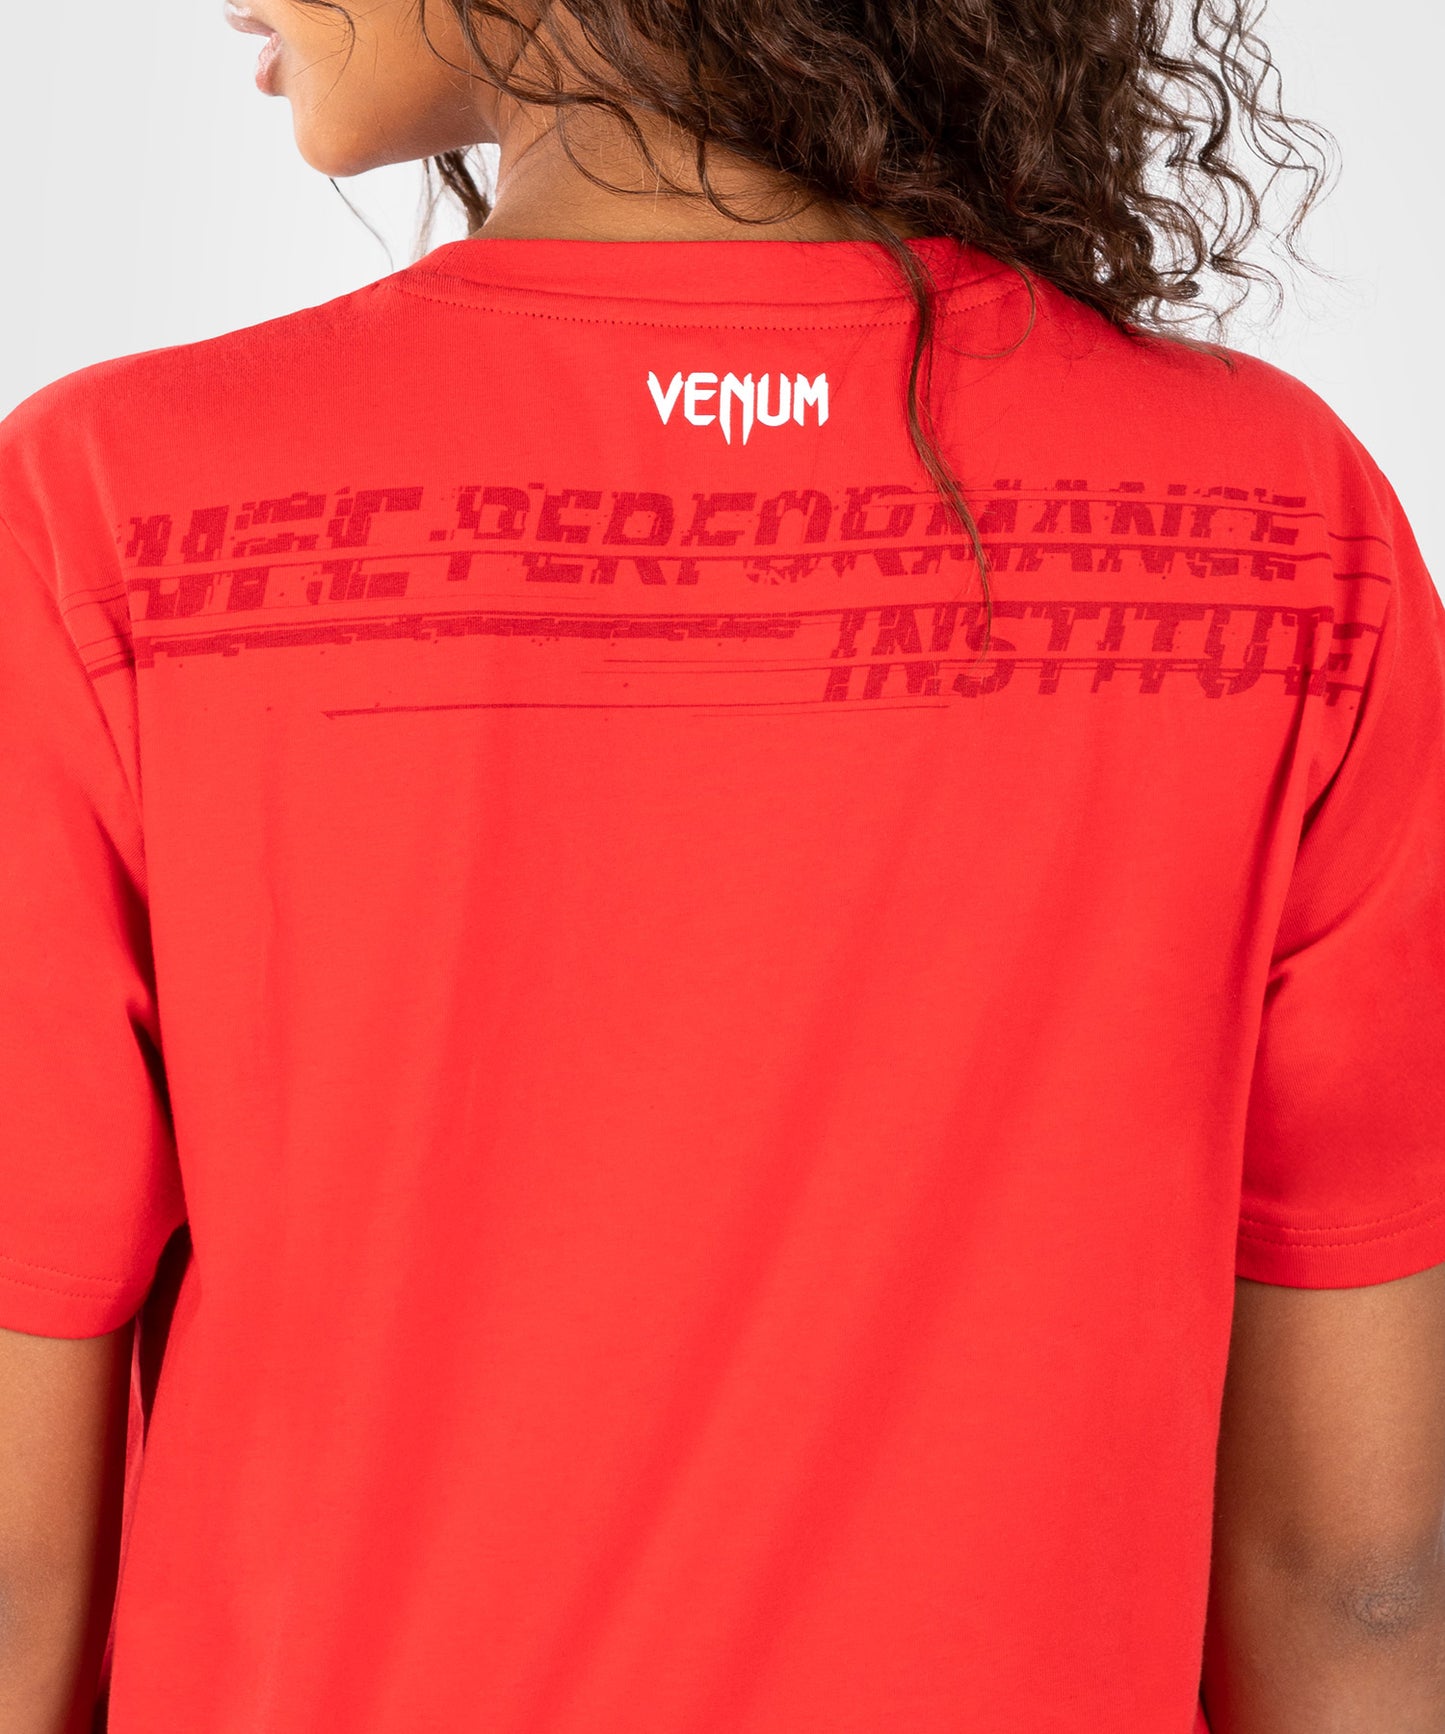 UFC Venum Performance Institute 2.0  Women’s T-Shirt - Red